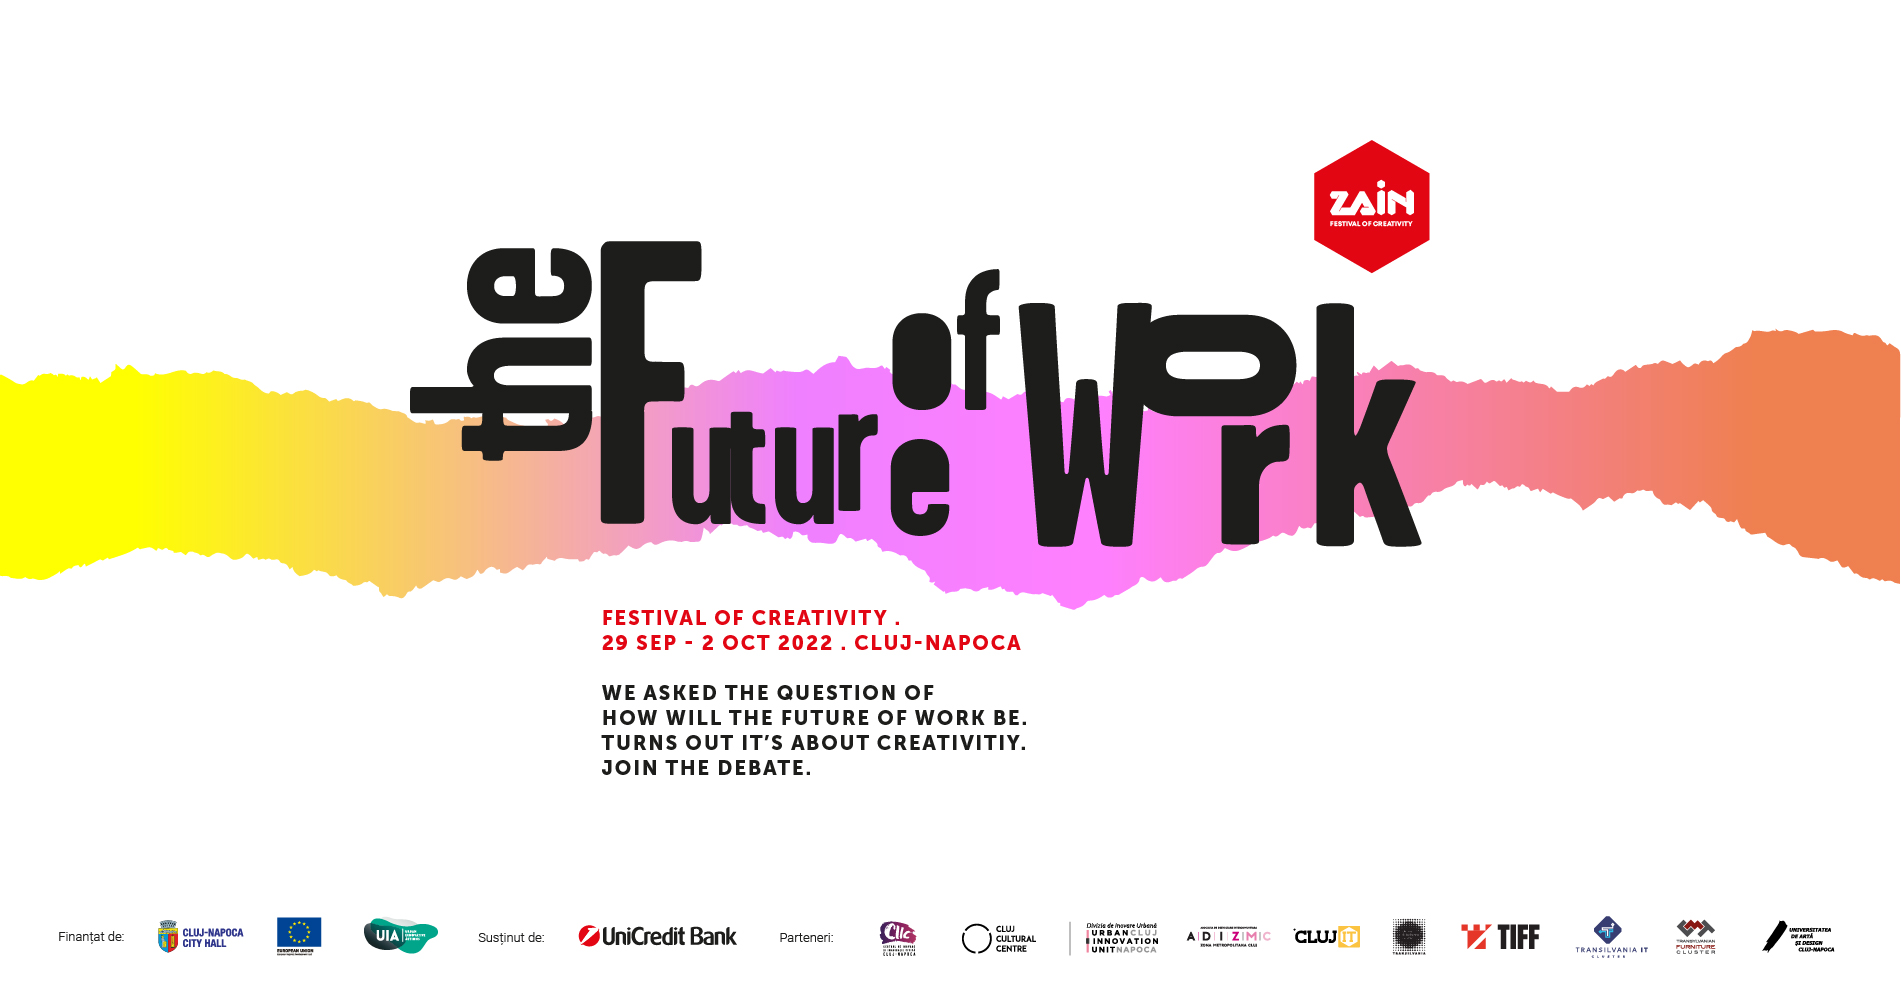 ZAIN - Festival of Creative Work